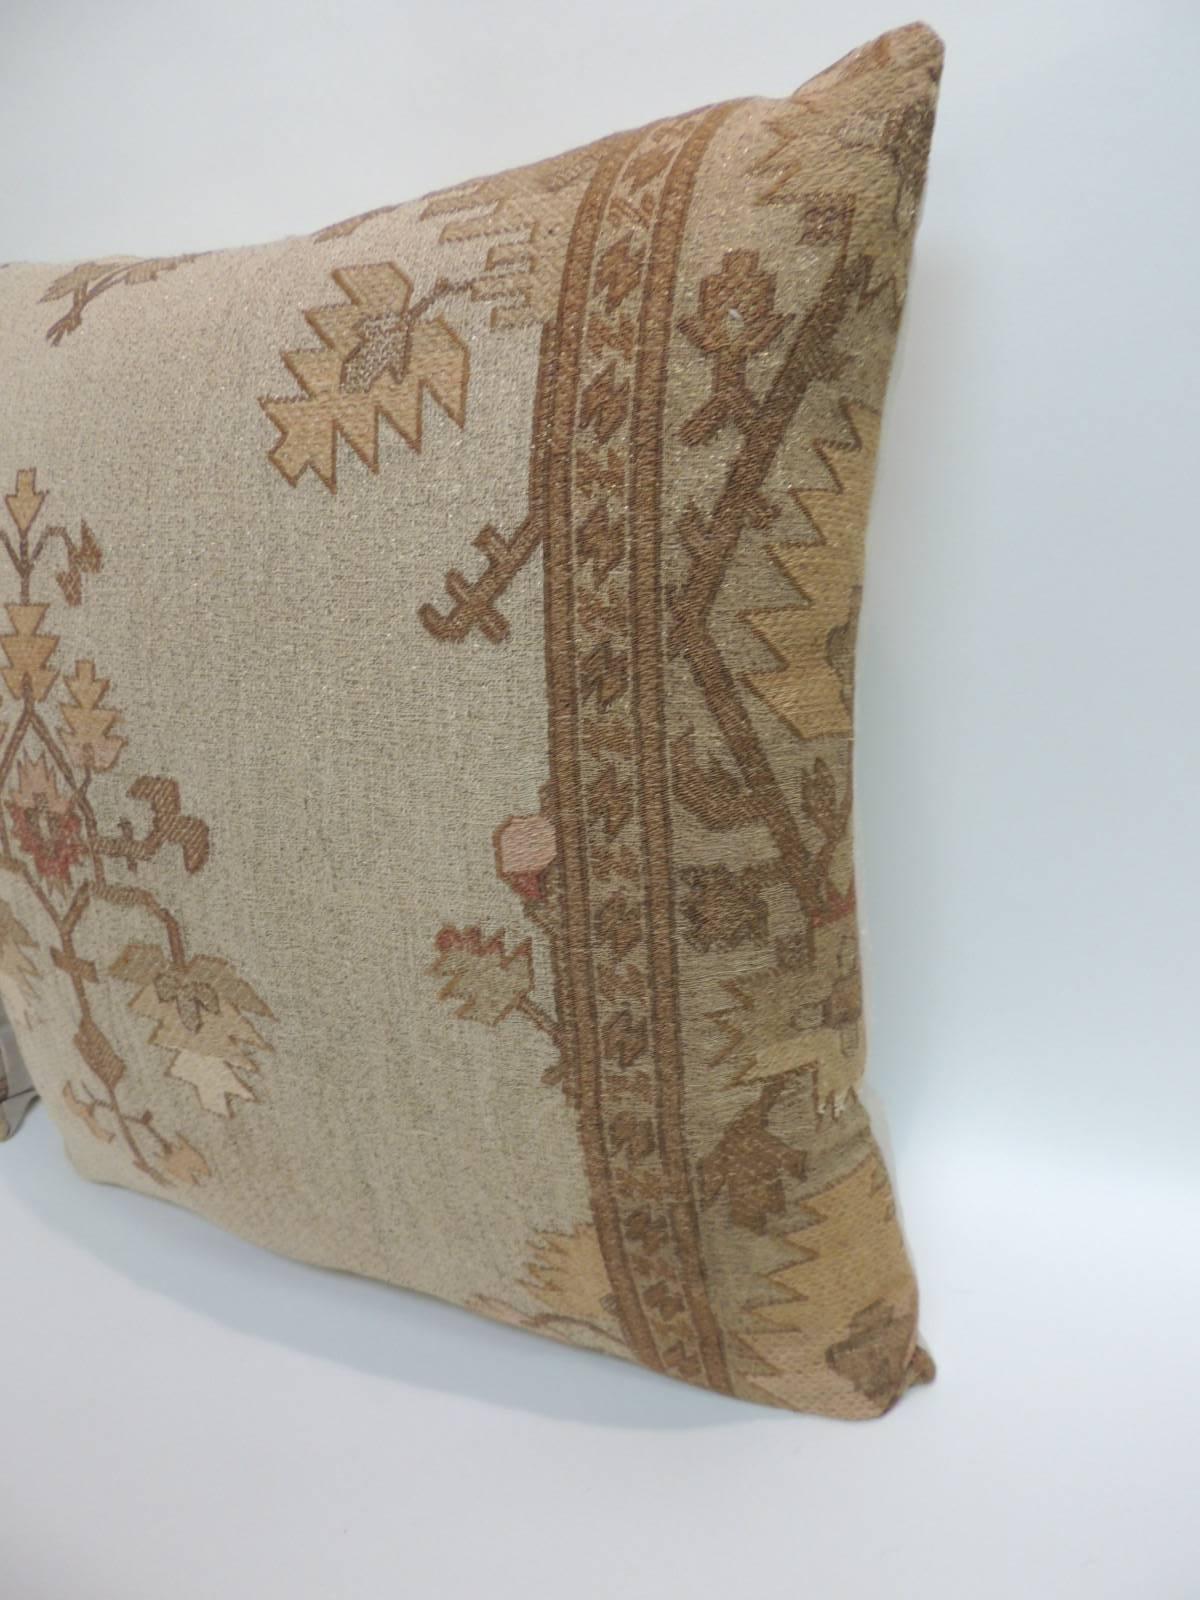 Moorish Pair of Gold Metallic Threads Embroidered Turkish Decorative Pillows